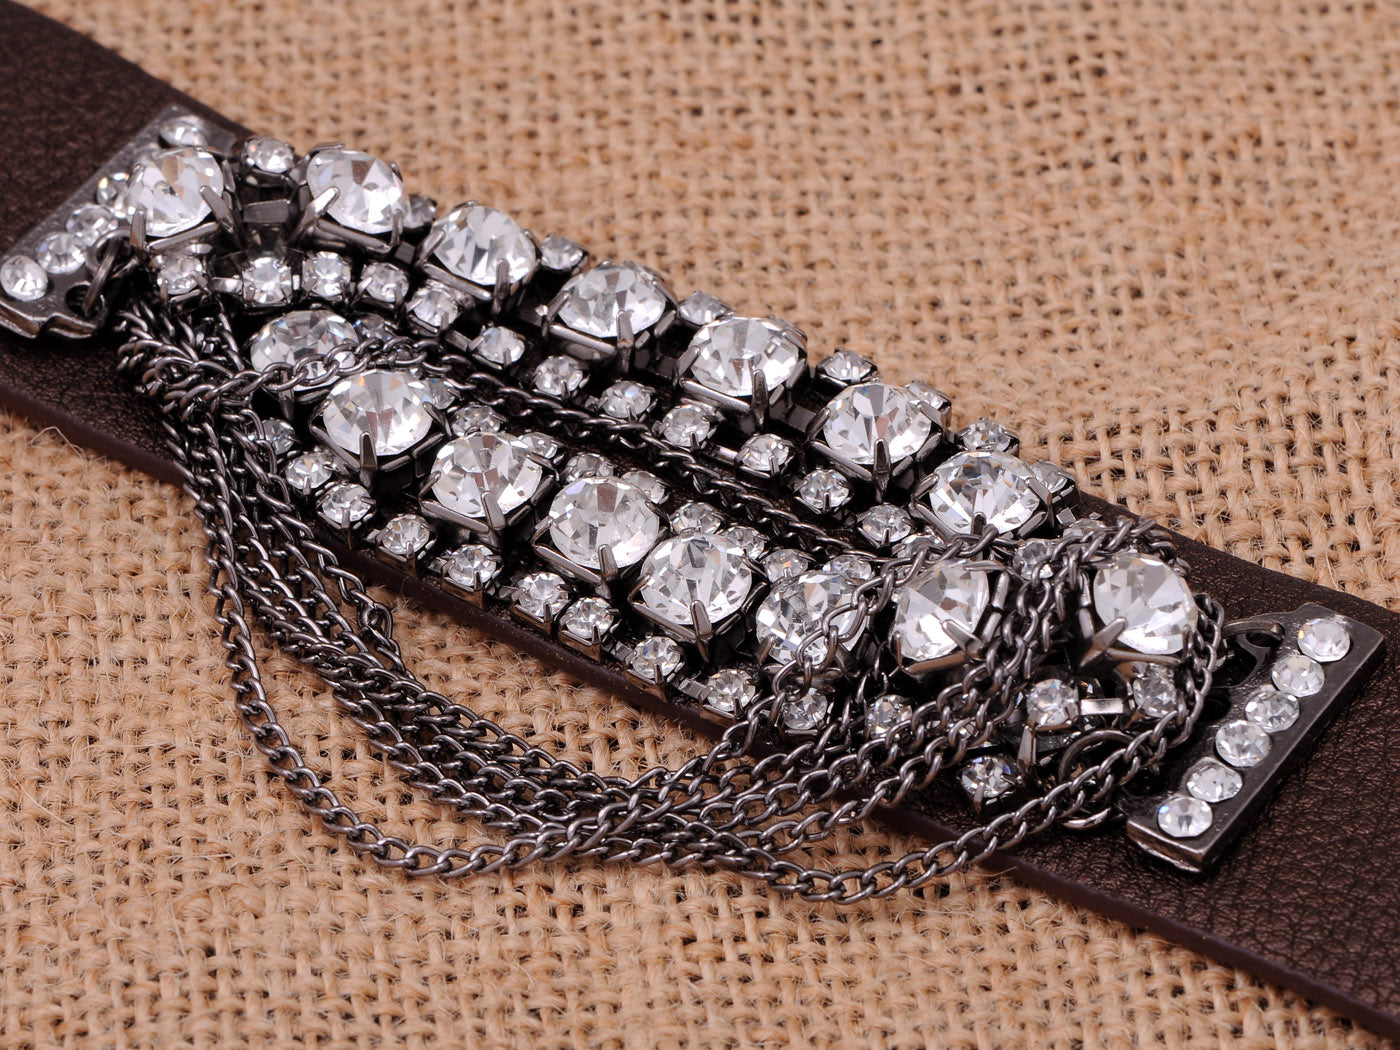 Rocker Leather Studded Chain Button Snap Wrap Cuff Bracelet